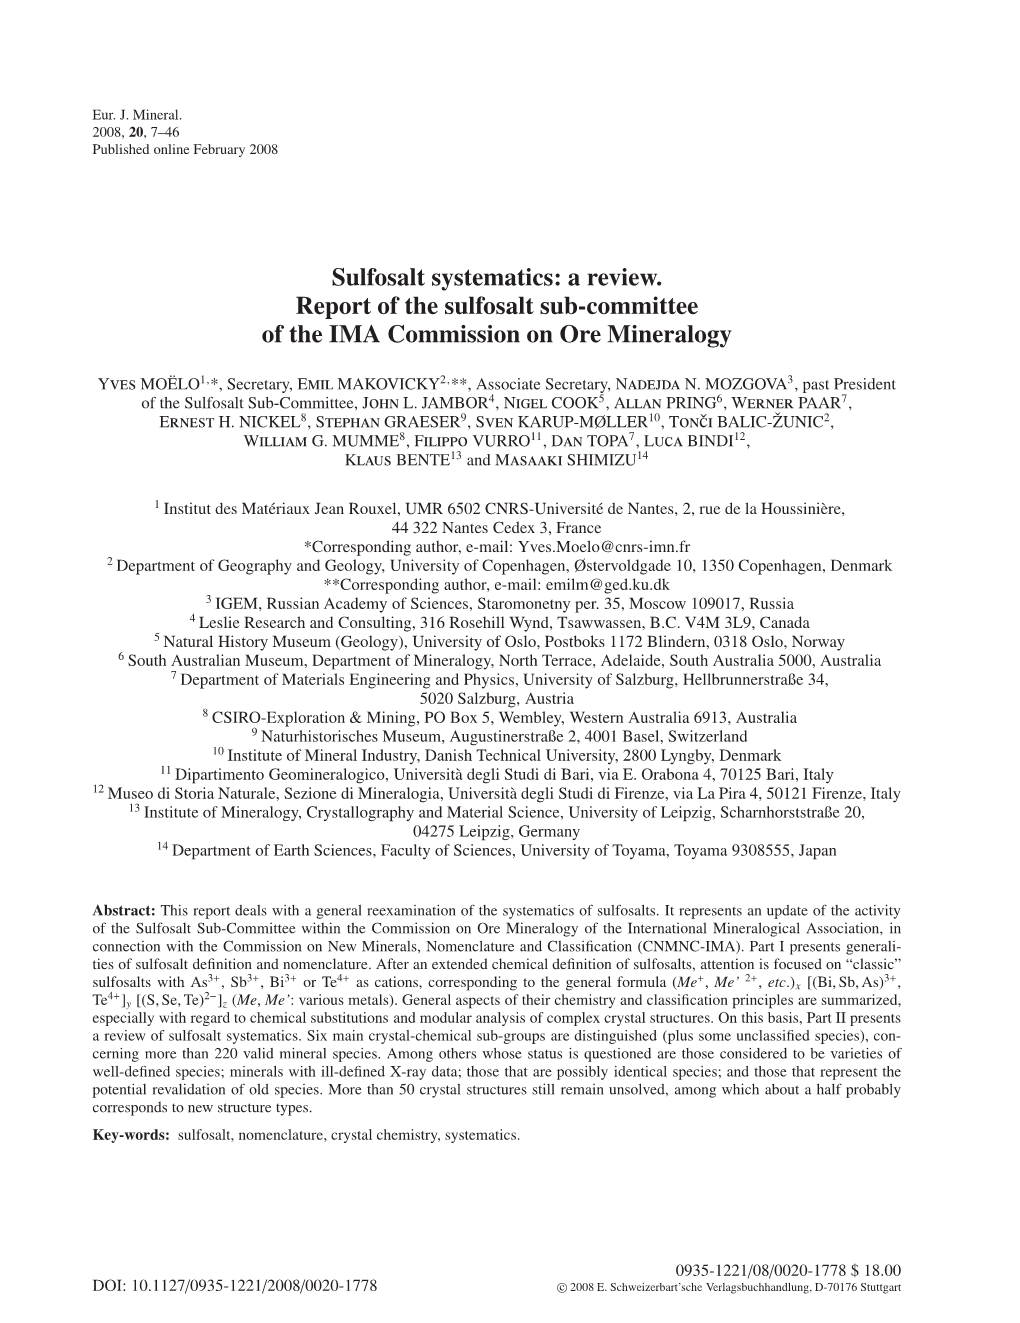 Sulfosalt Systematics: a Review